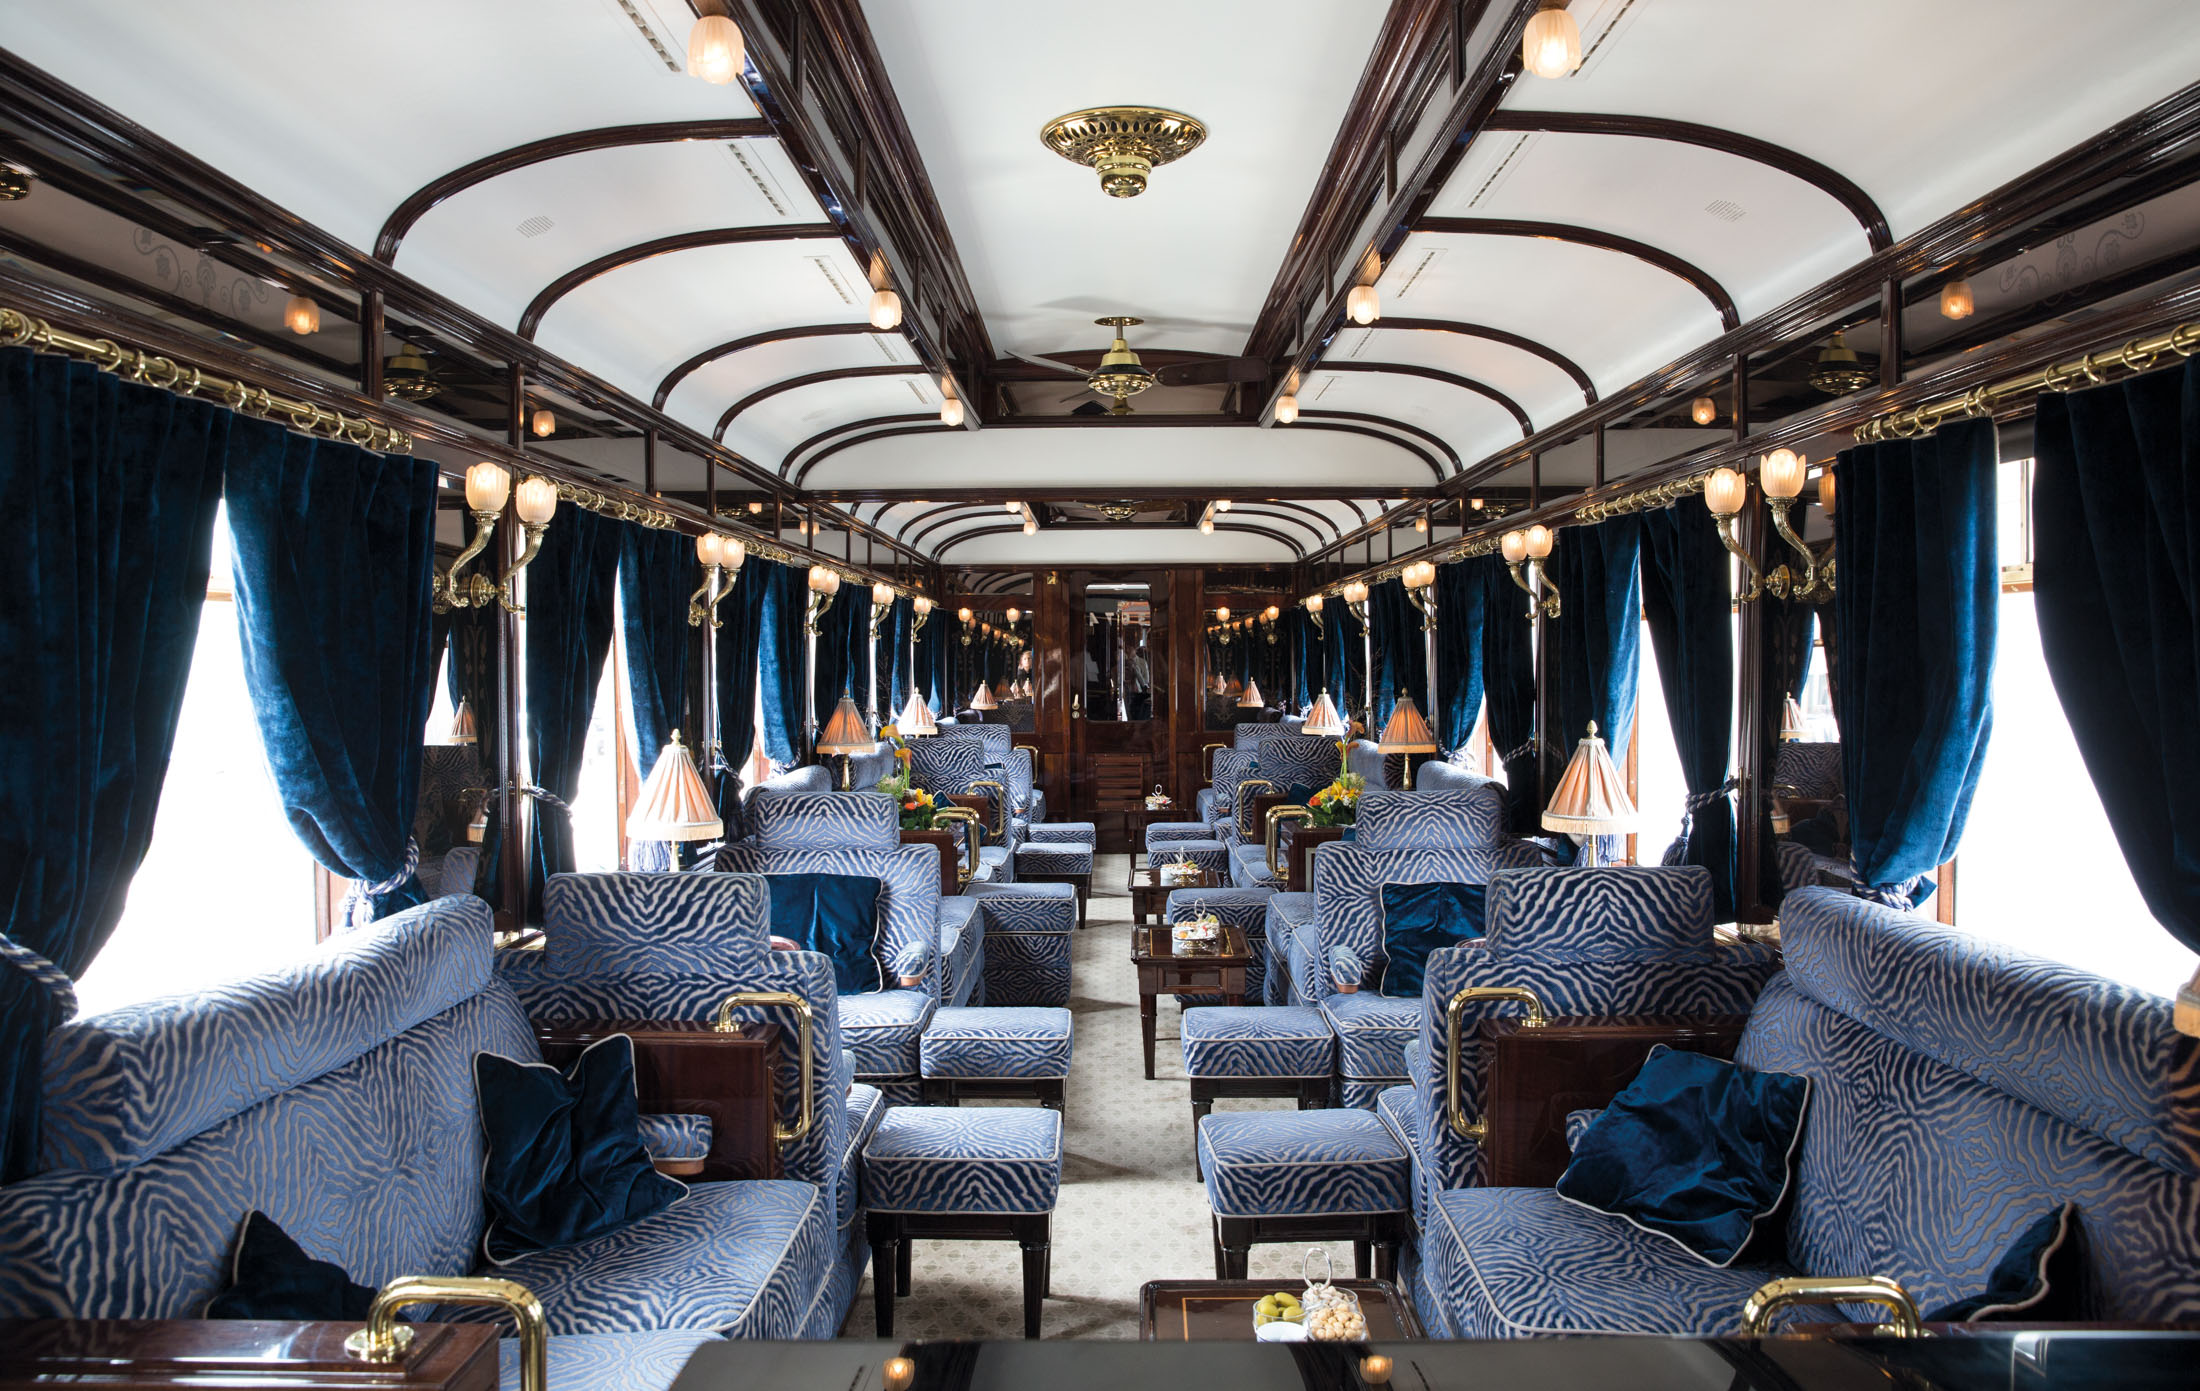 The best sleeper trains in Europe: Orient Express, Caledonian Sleeper